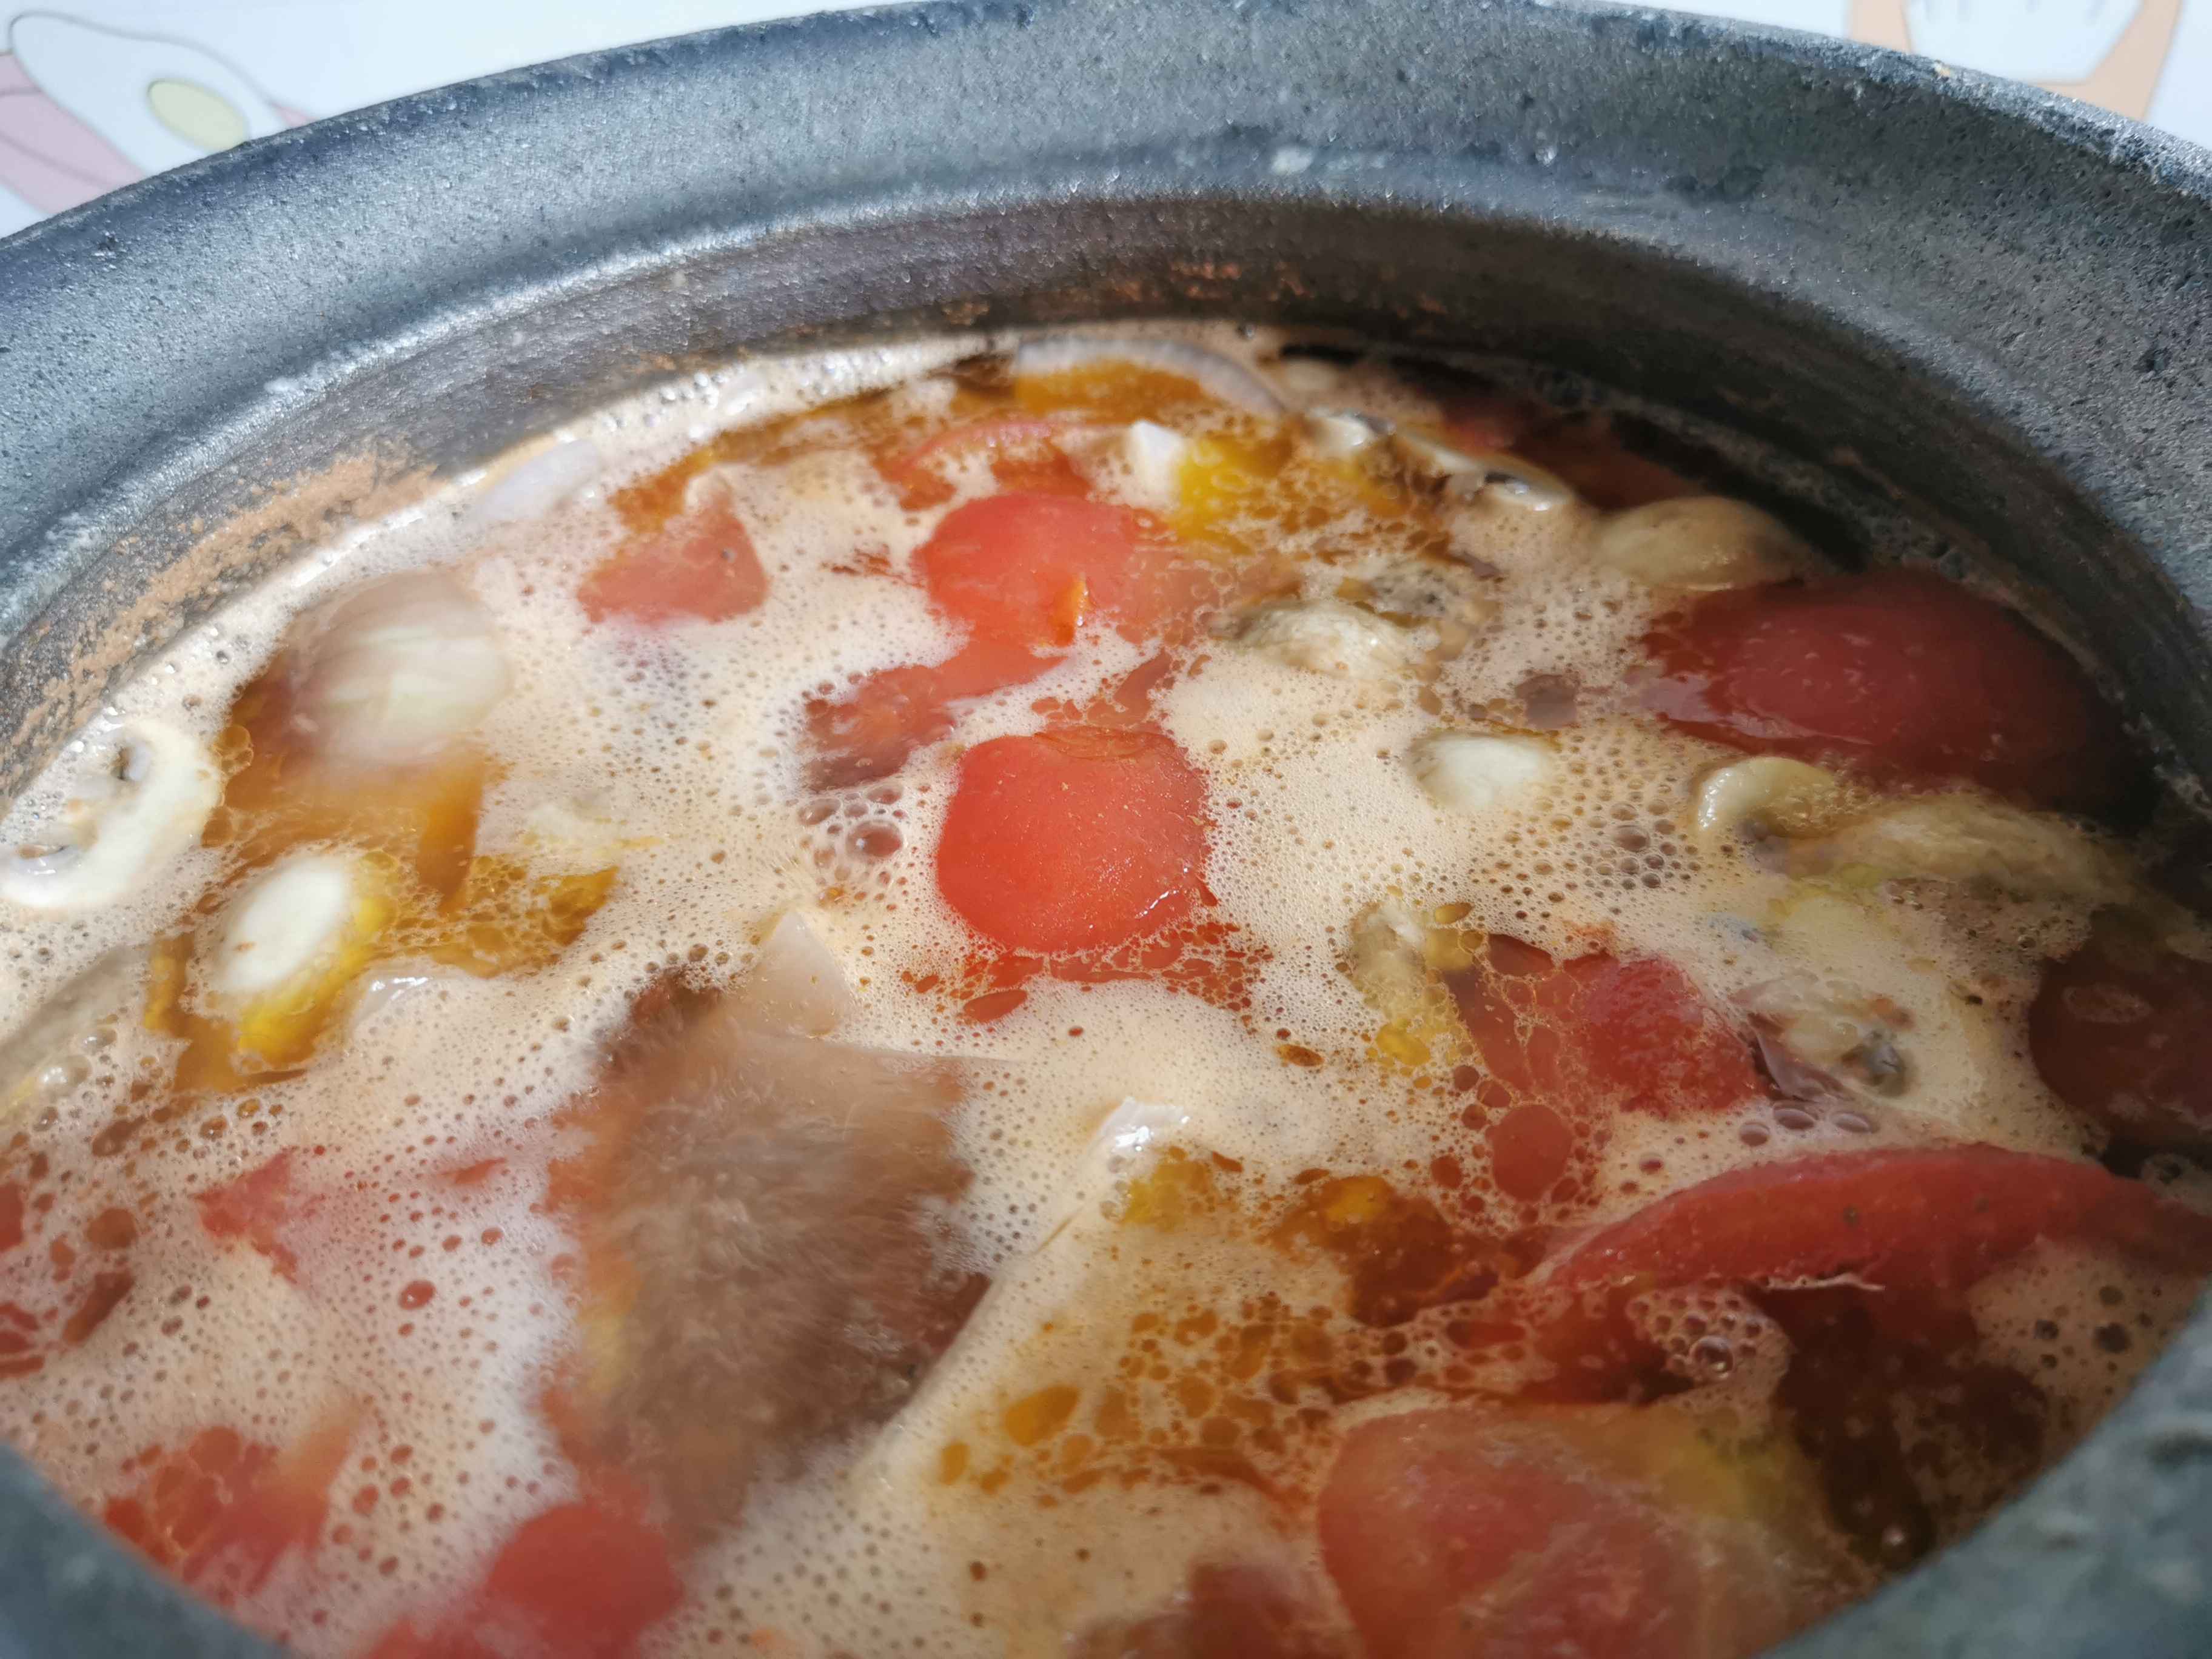 Tomato Beef Bone Soup recipe